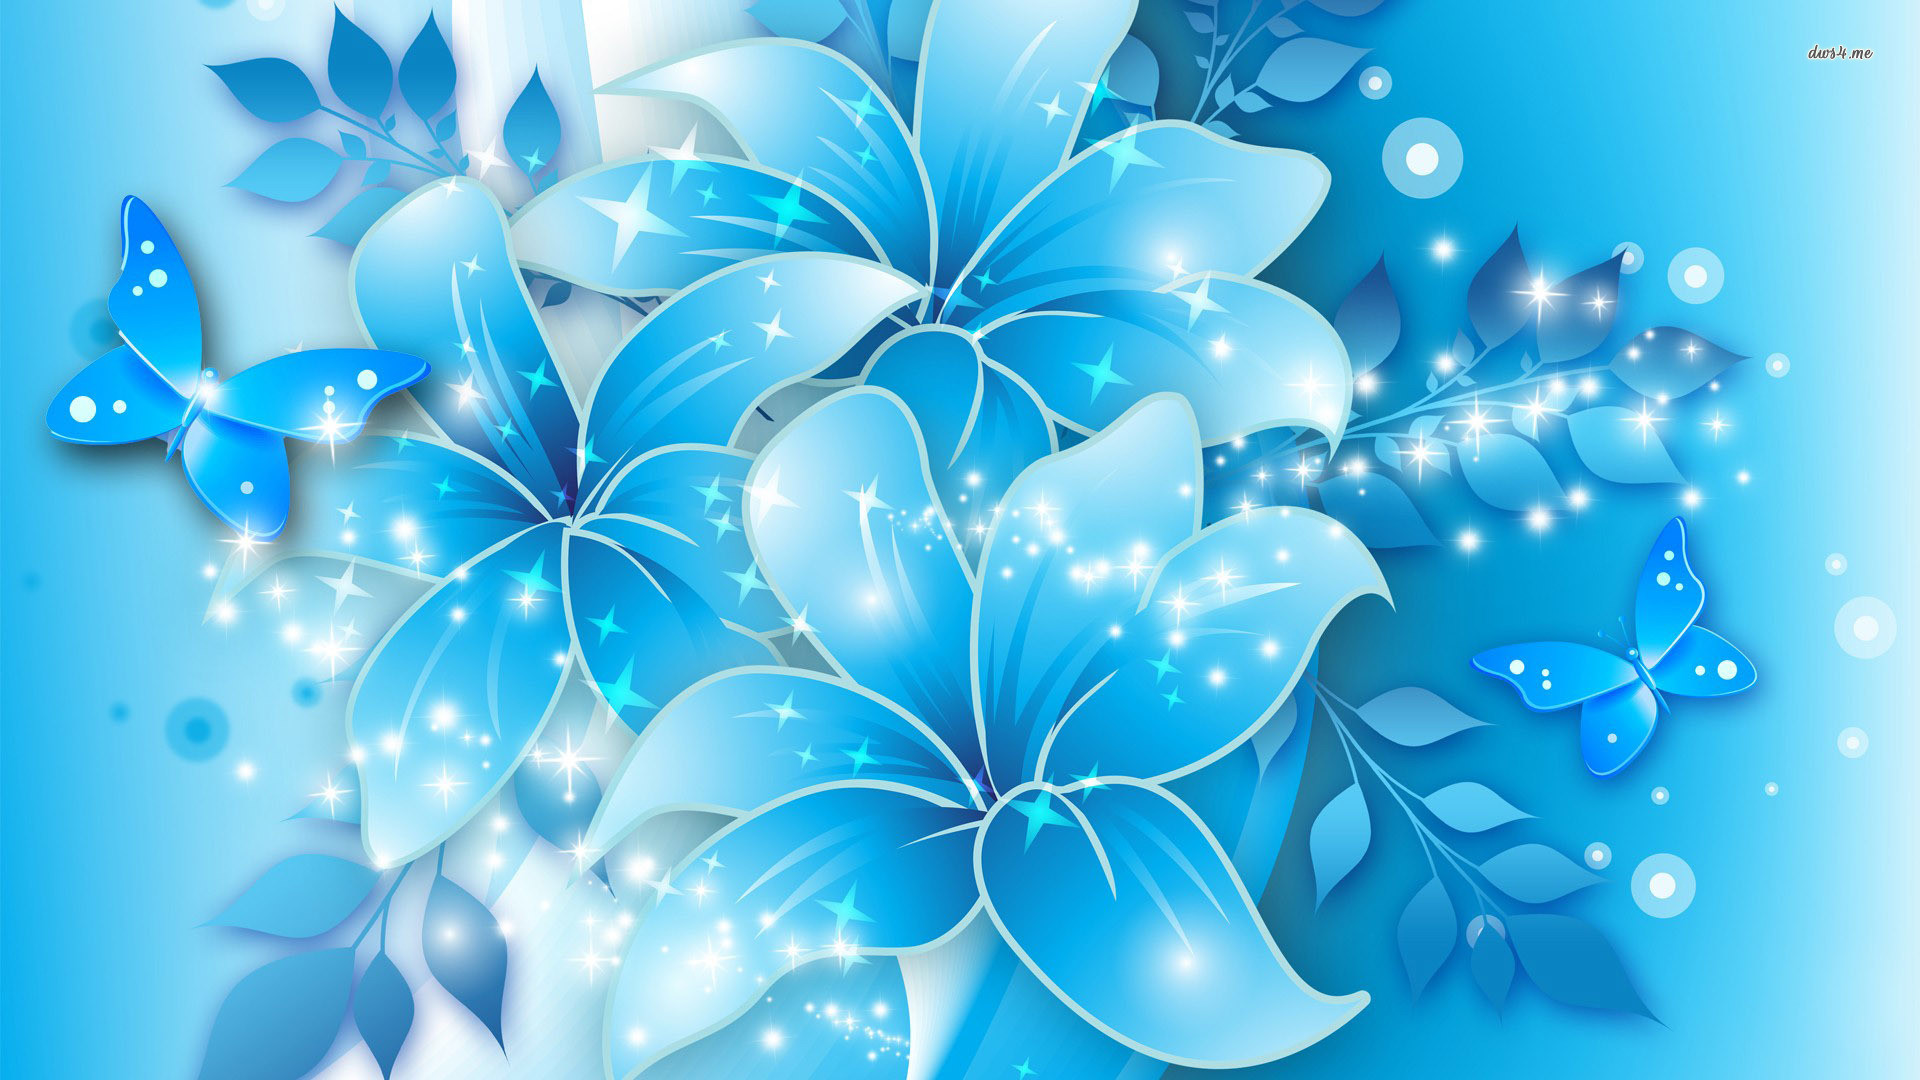 1920x1080 BLUE FLOWERS AND BUTTERFLIES WALLPAPER. |Download|